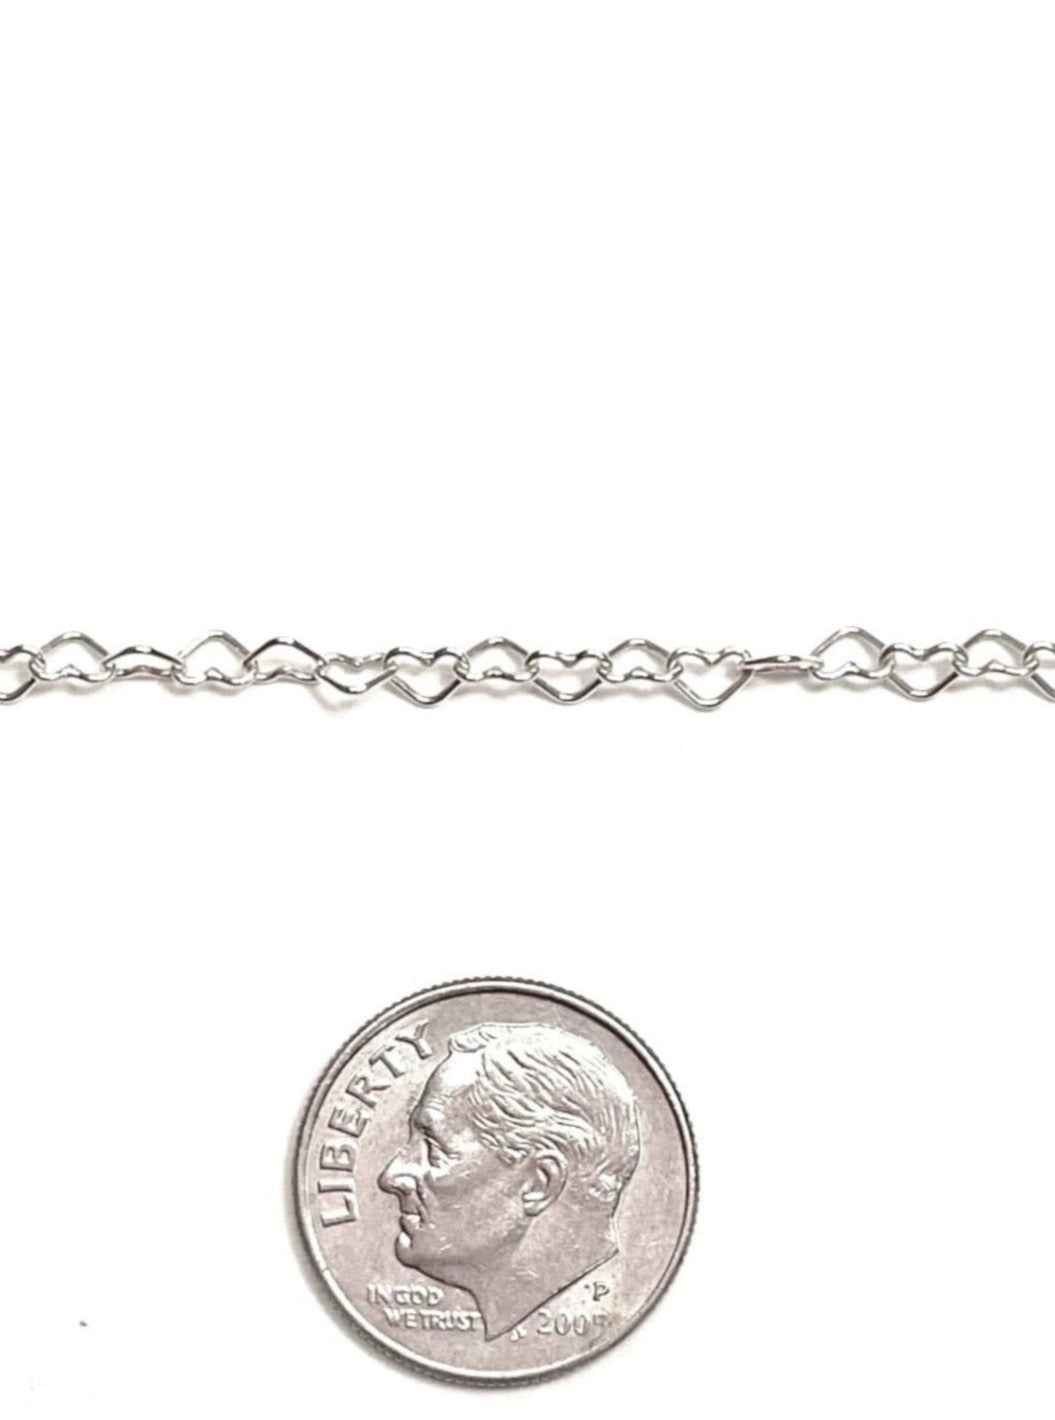 Sweetheart Chain in Sterling Silver